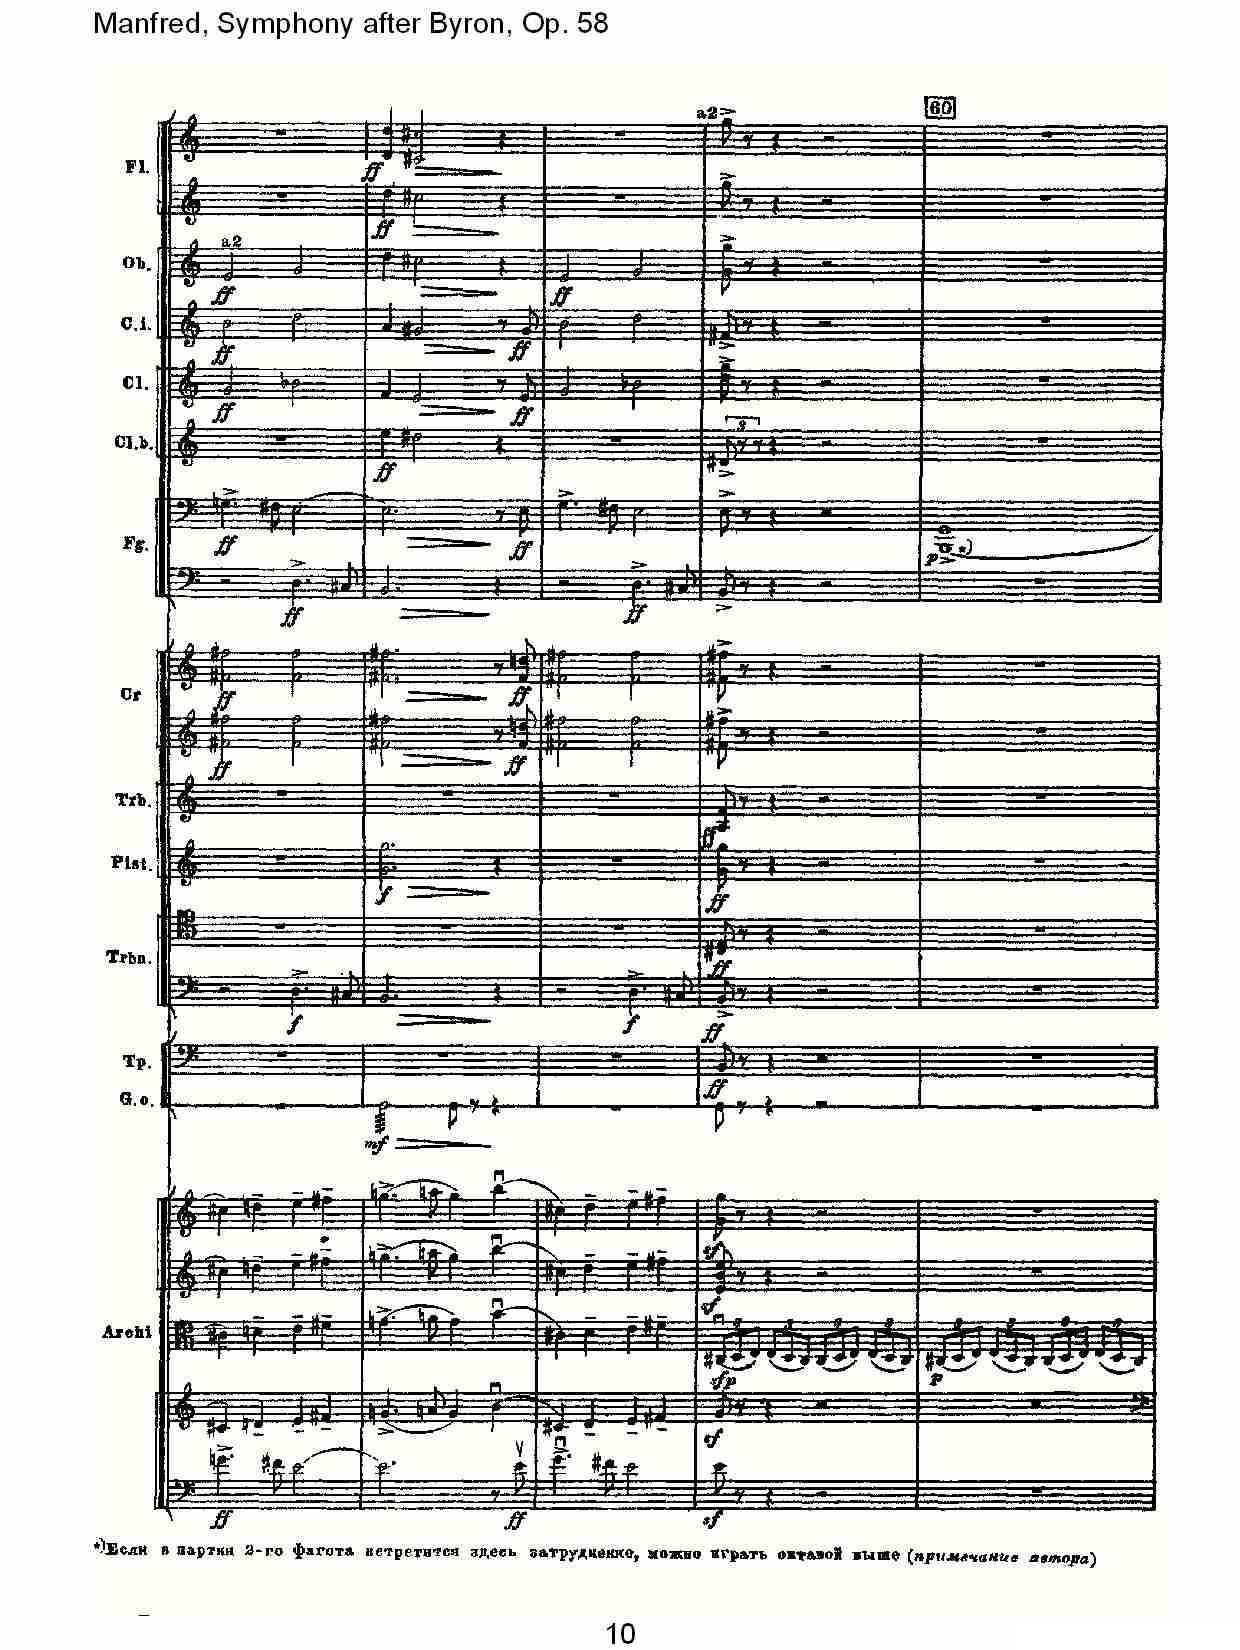 Manfred, Symphony after Byron, Op.58第一乐章（一）其它曲谱（图10）